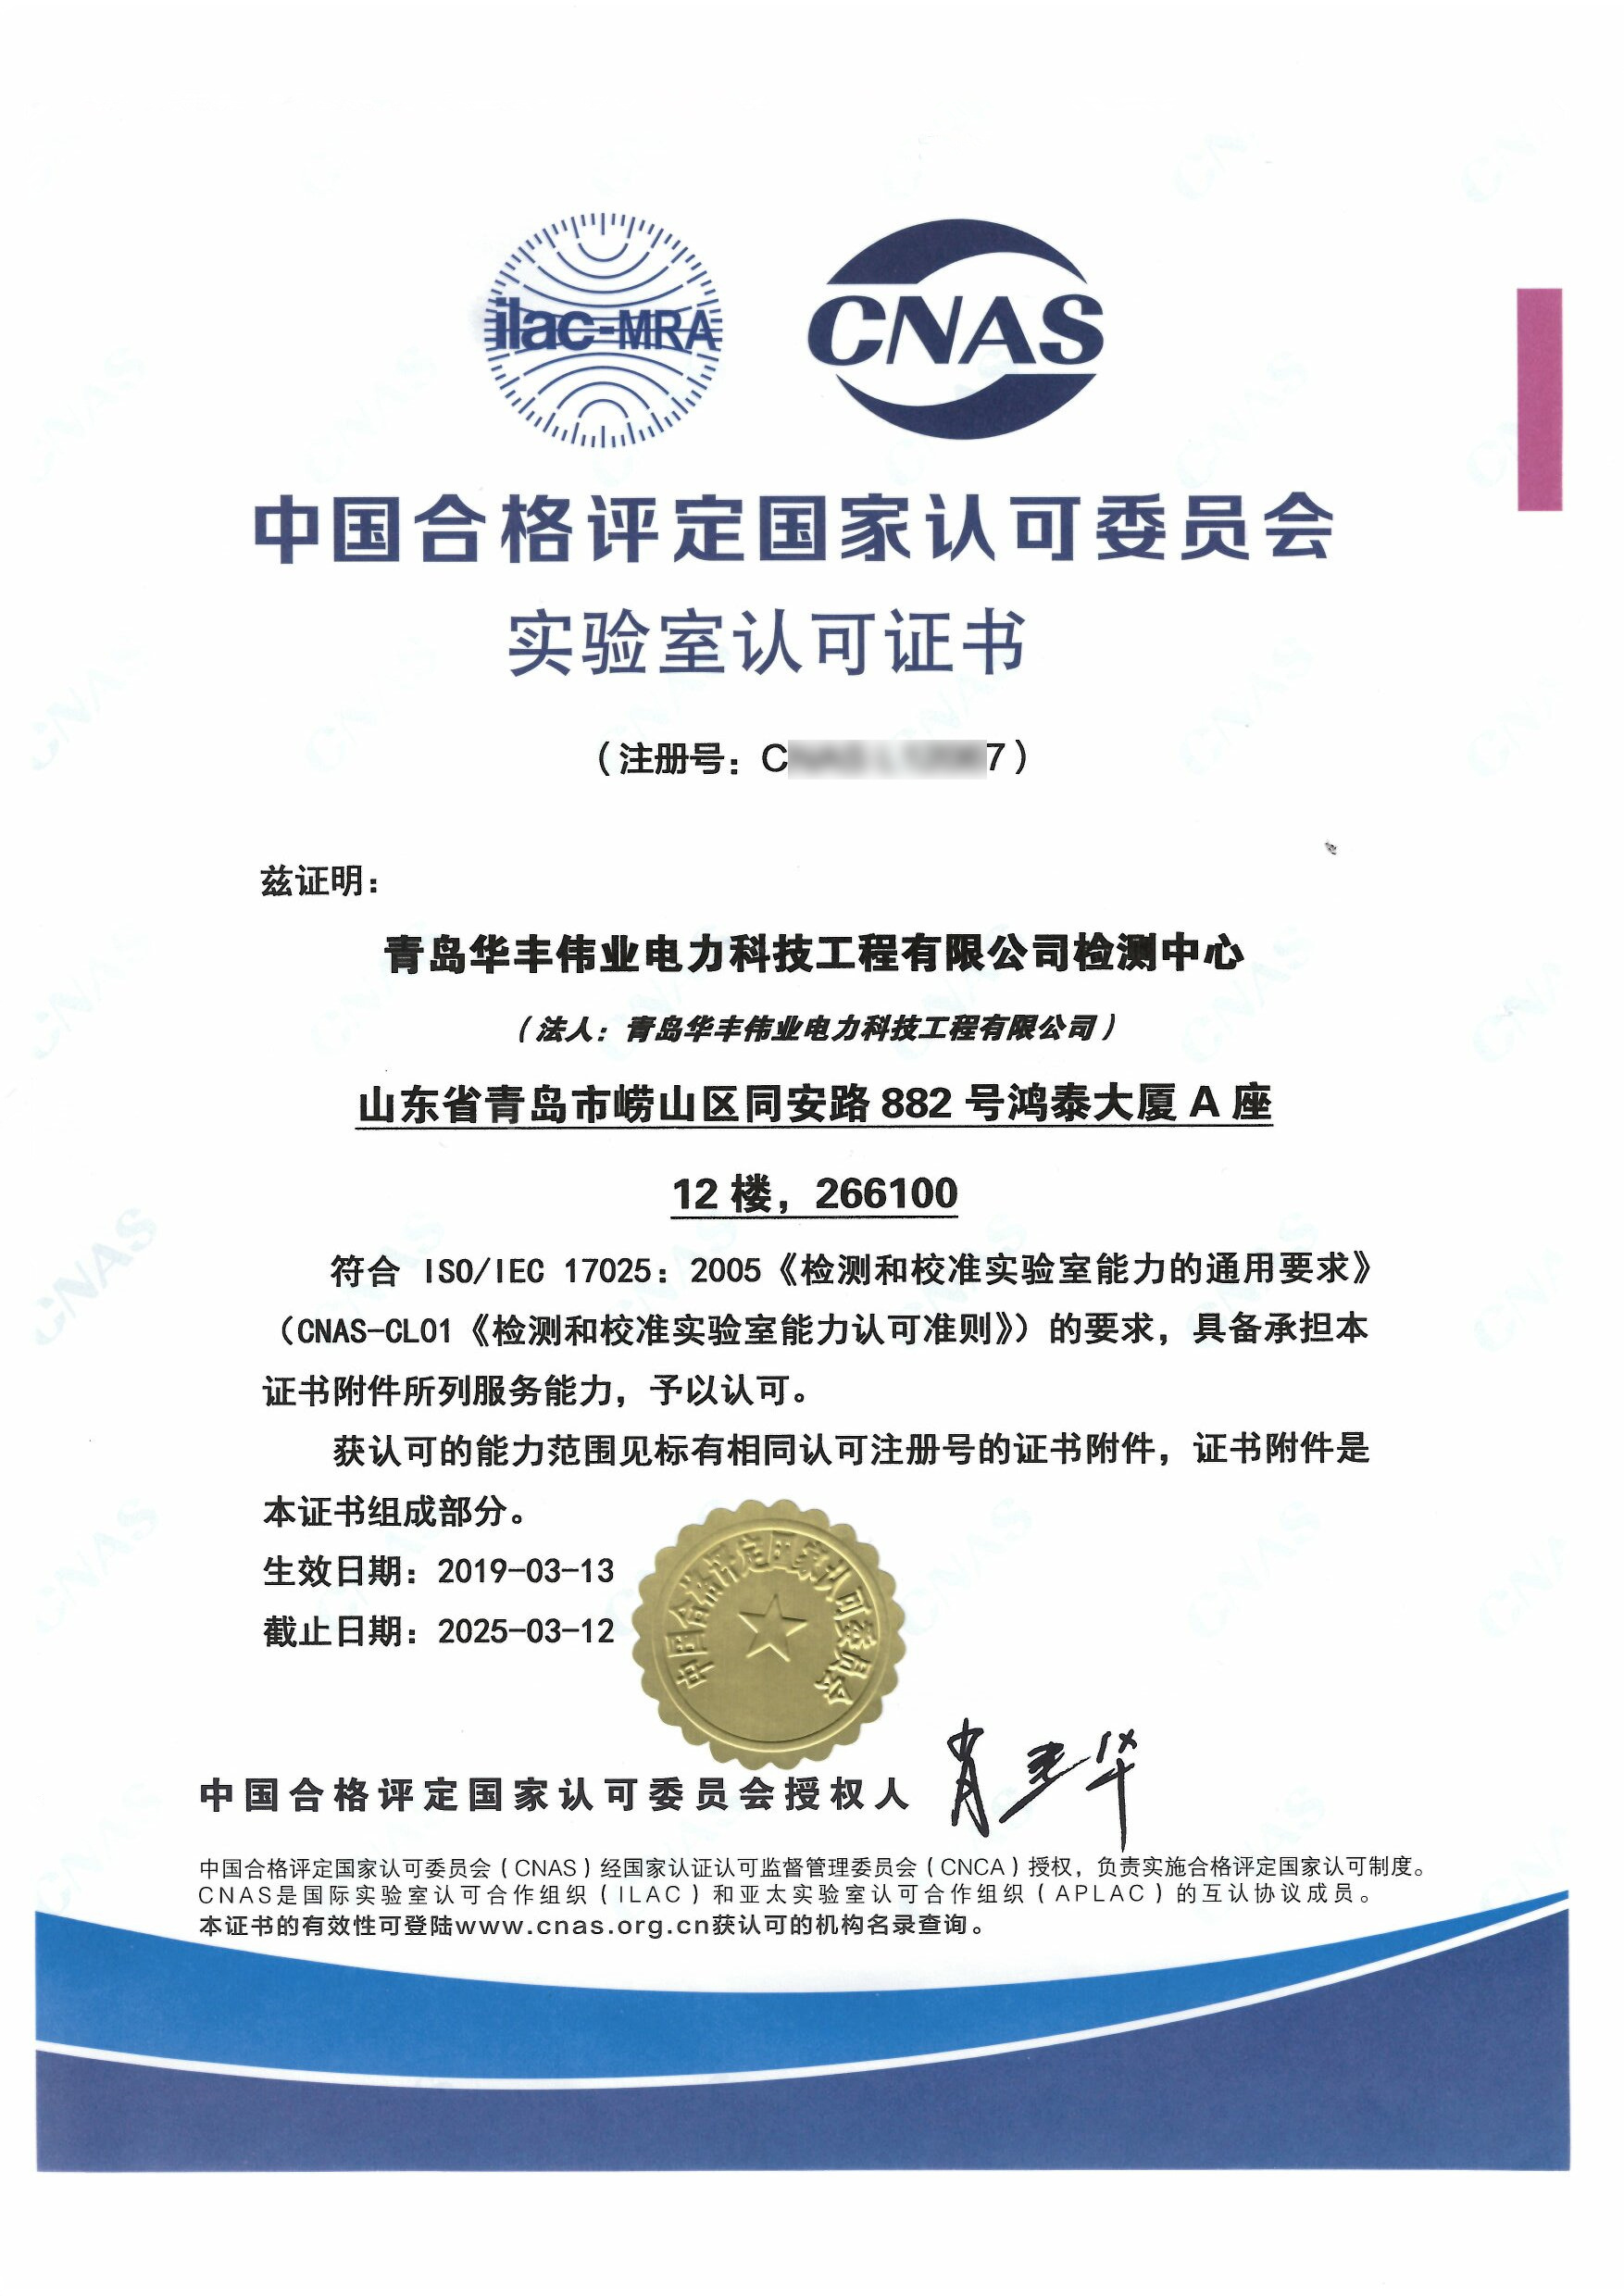 CNAS Certificate